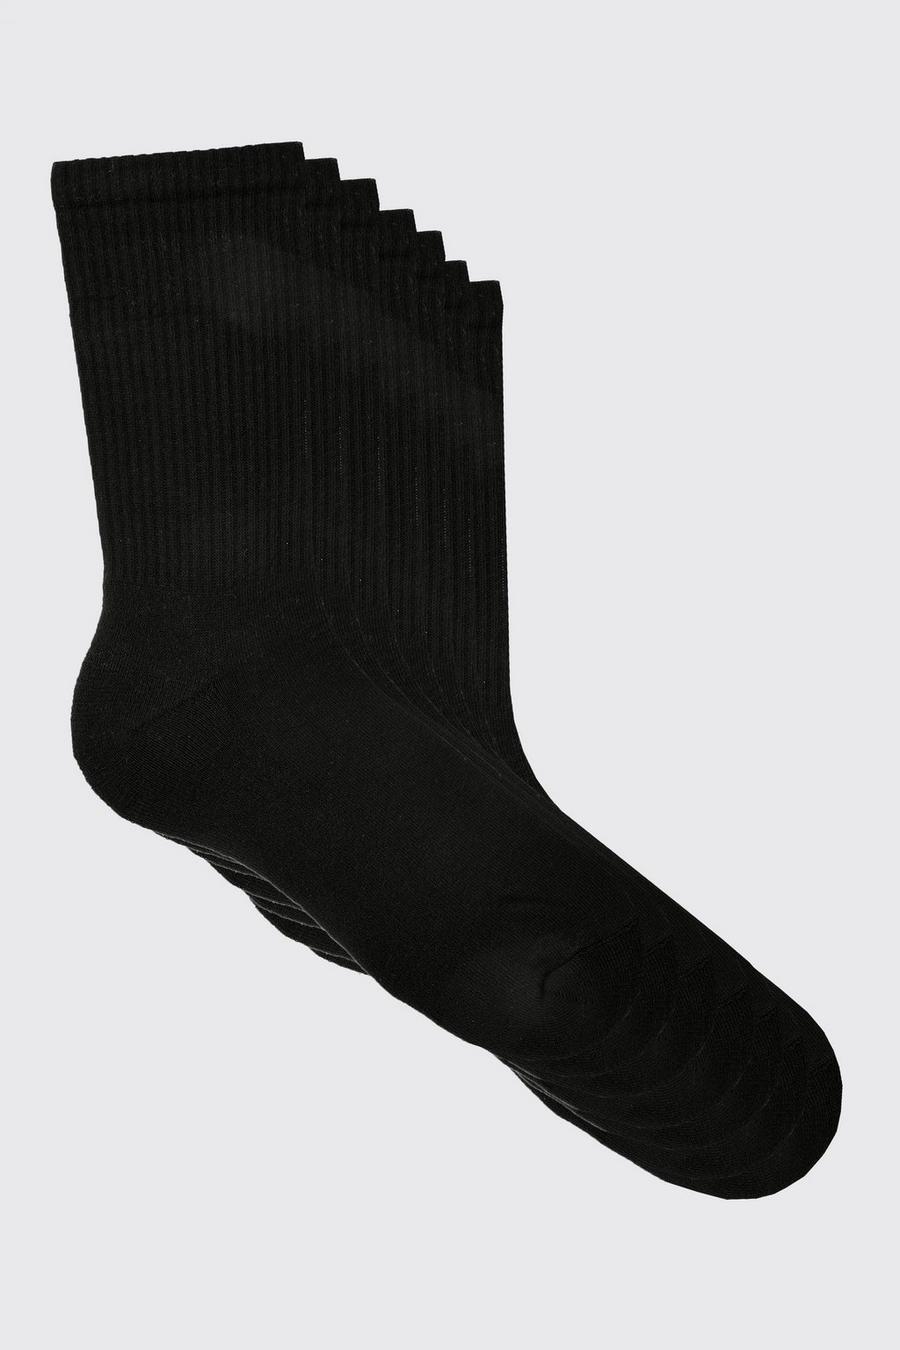 Black 7 Mens Graphic Print Socks